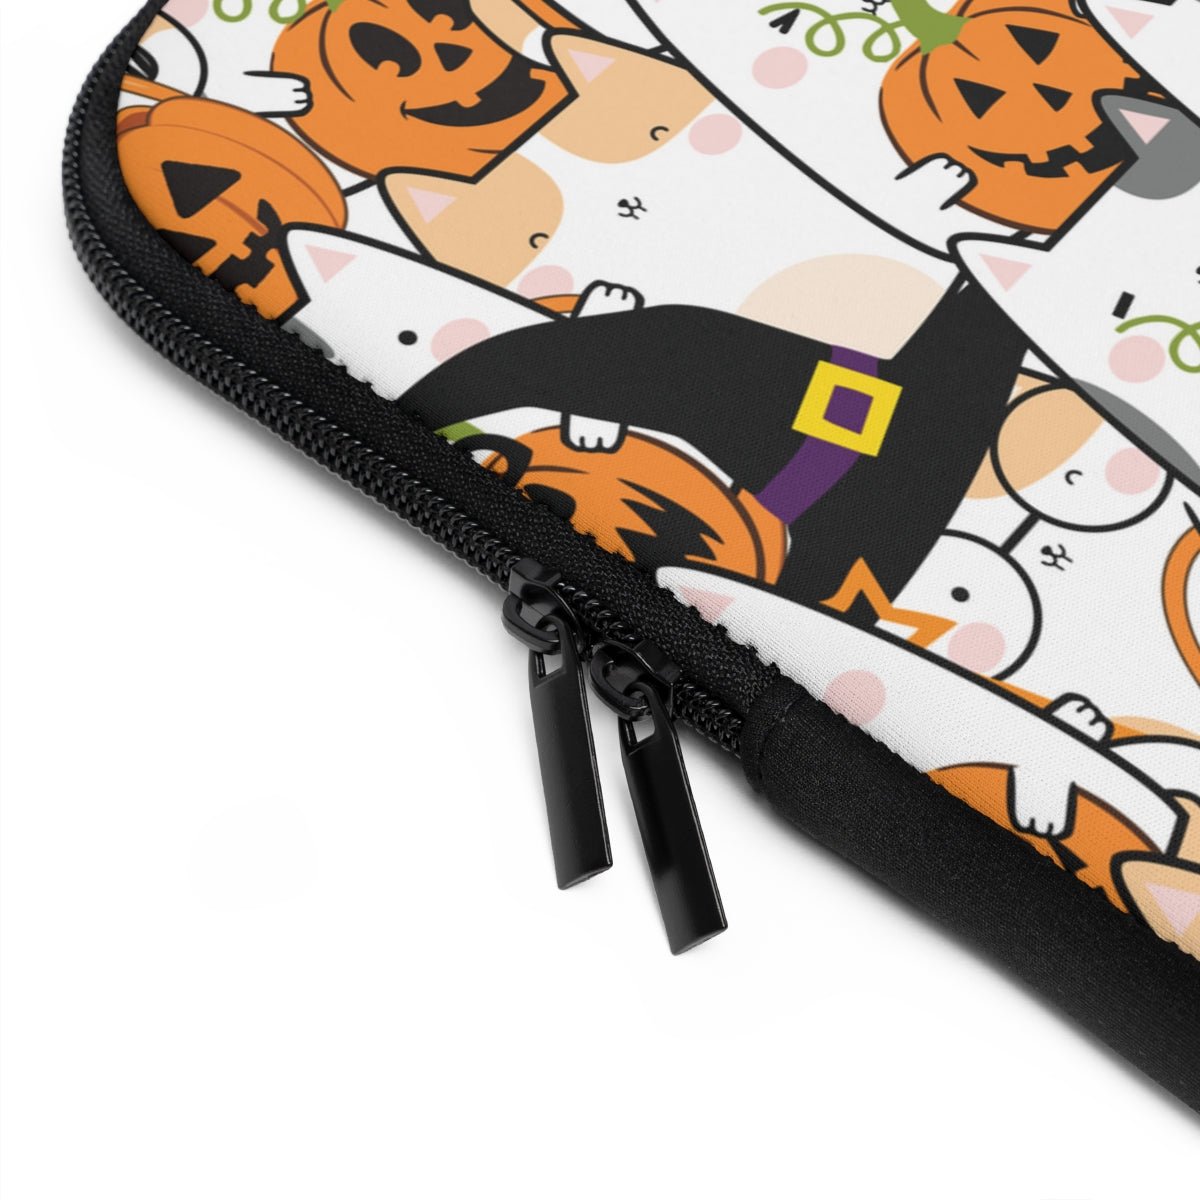 Halloween Kawaii Cats and Pumpkins Laptop Sleeve - Puffin Lime